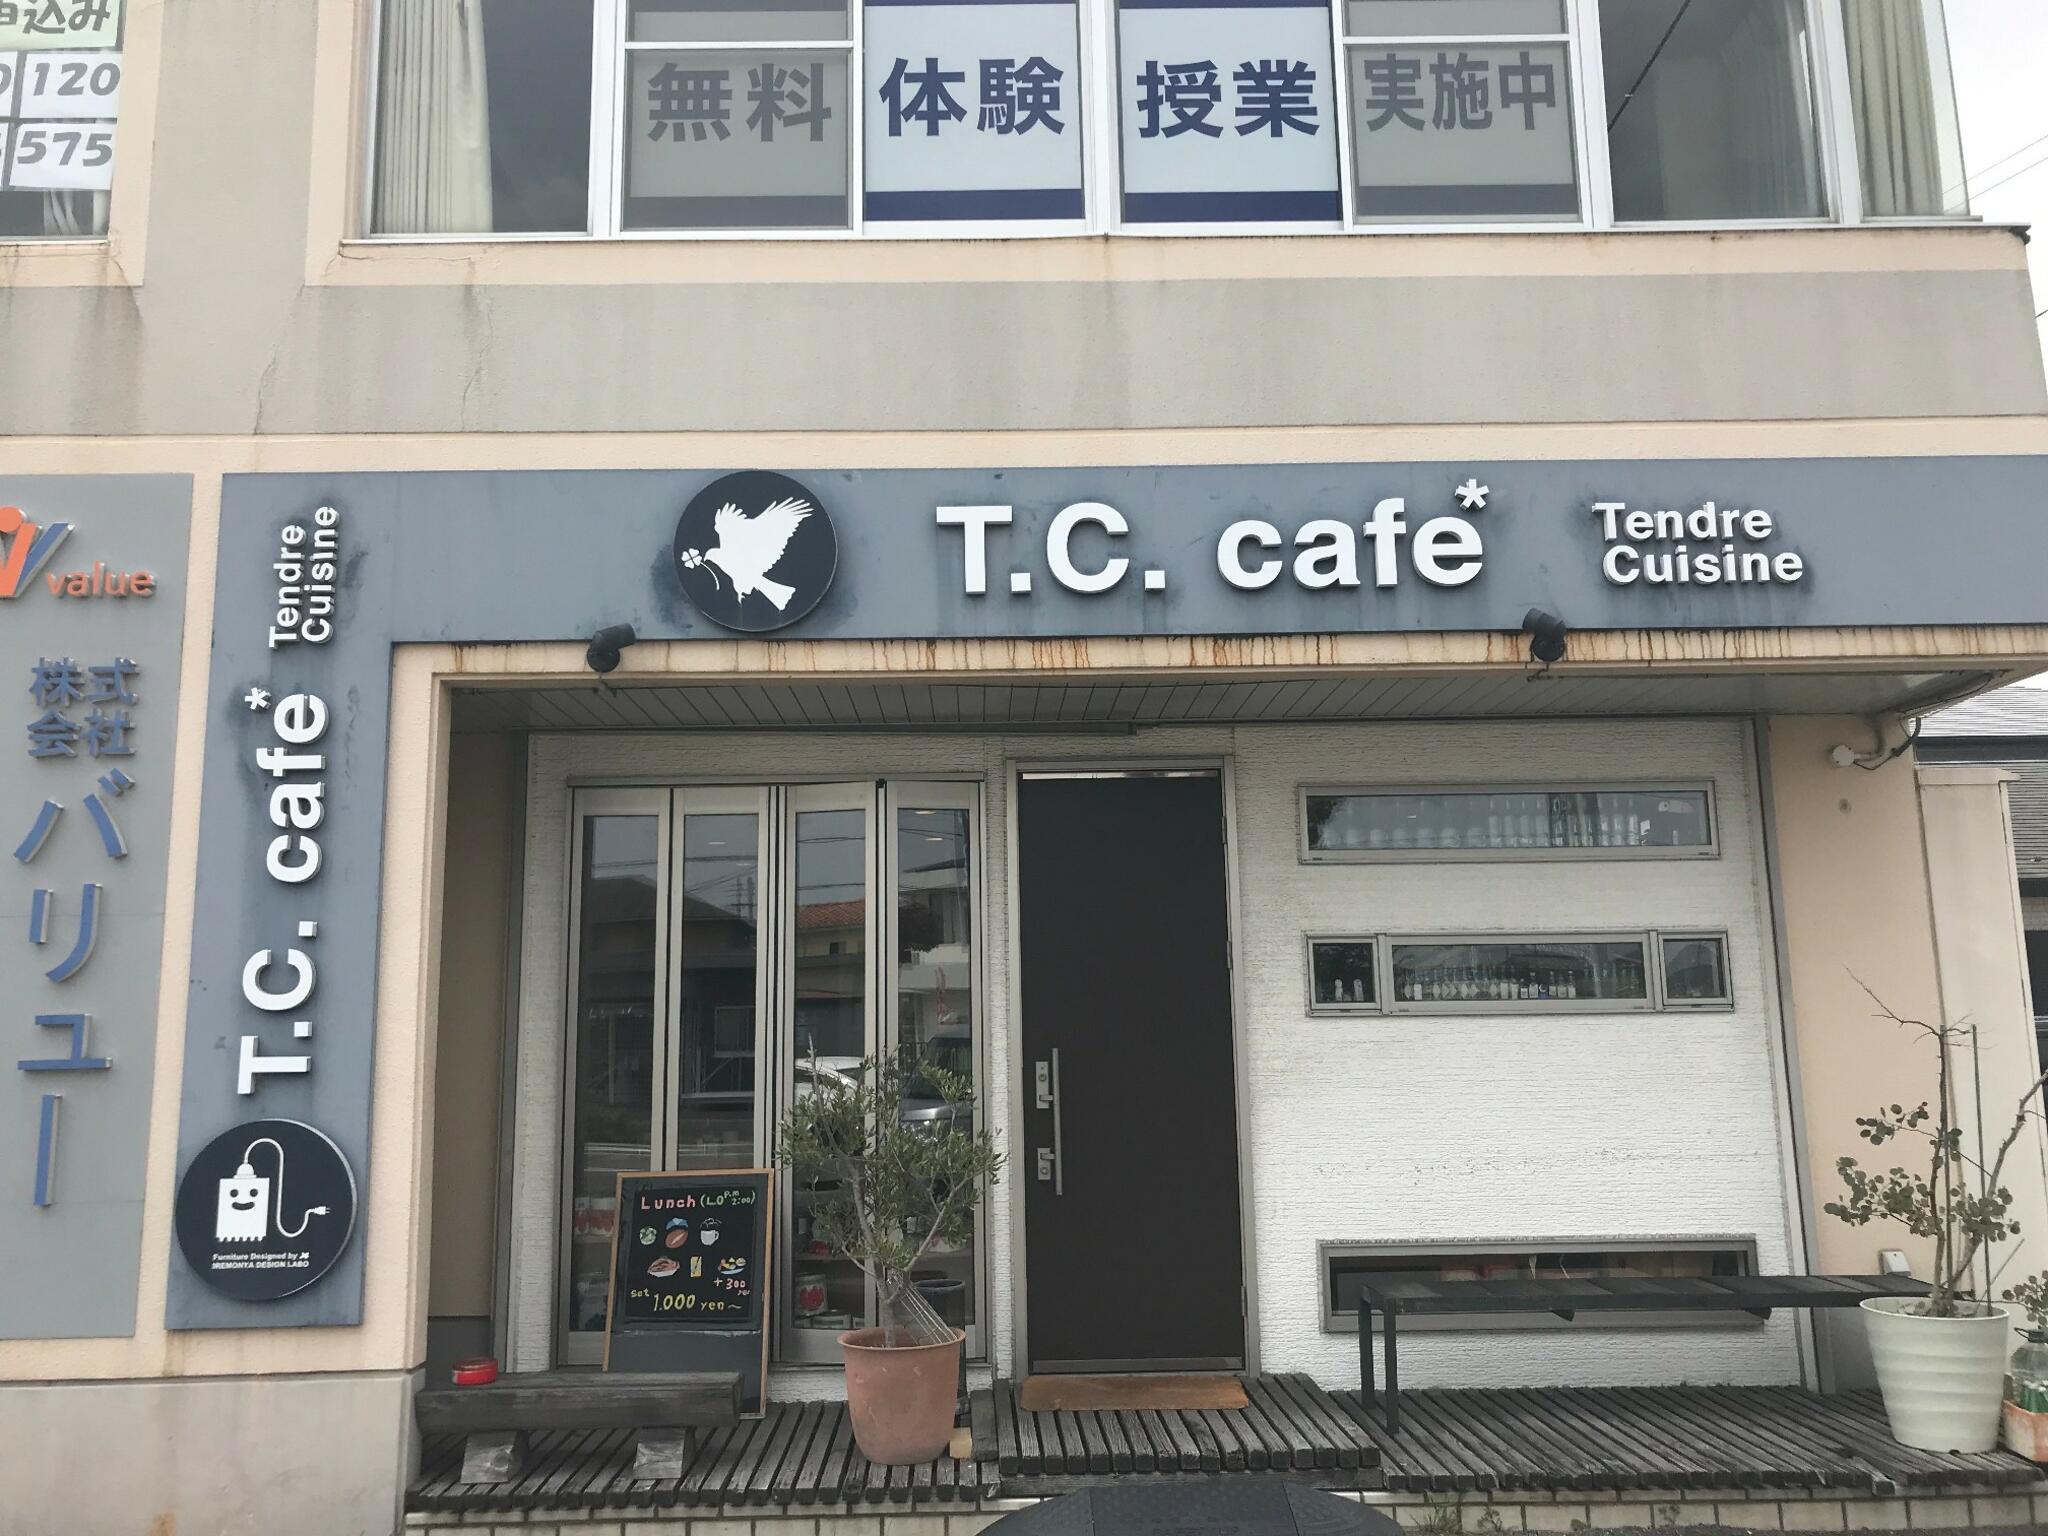 T.C.cafeの代表写真2